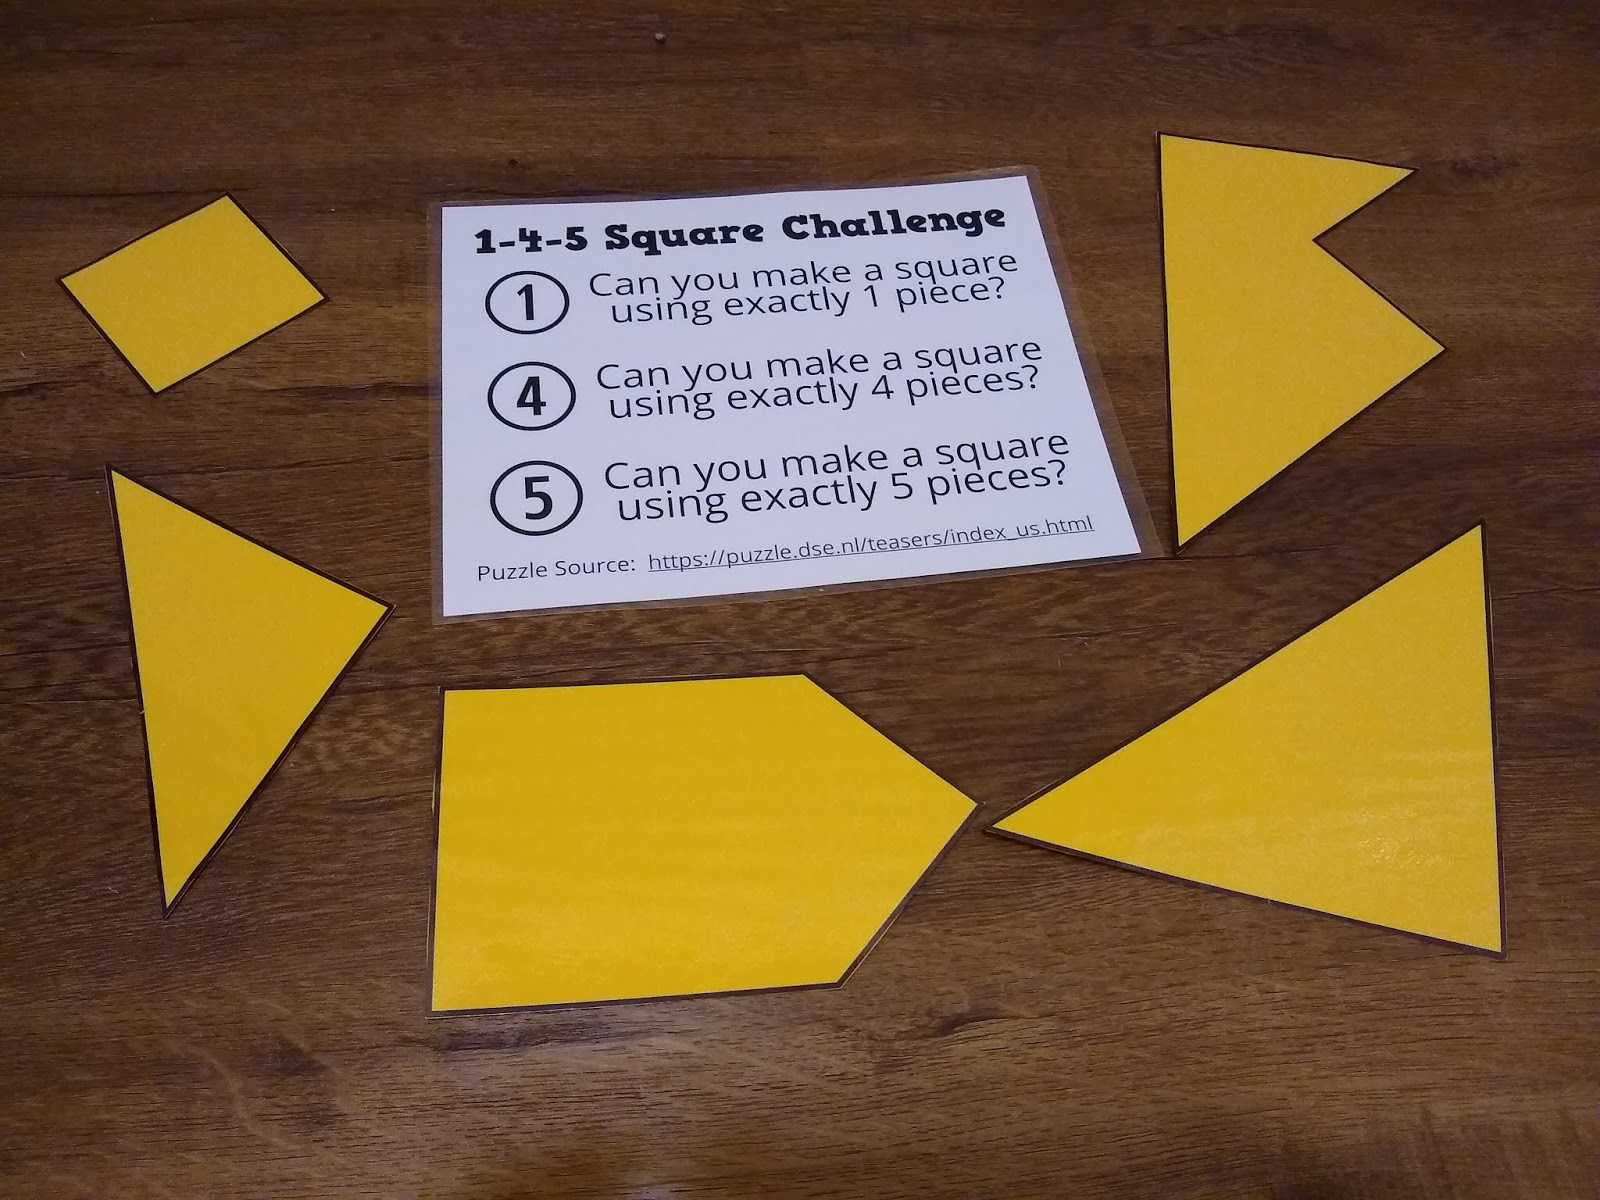 1-4-5 Square Challenge